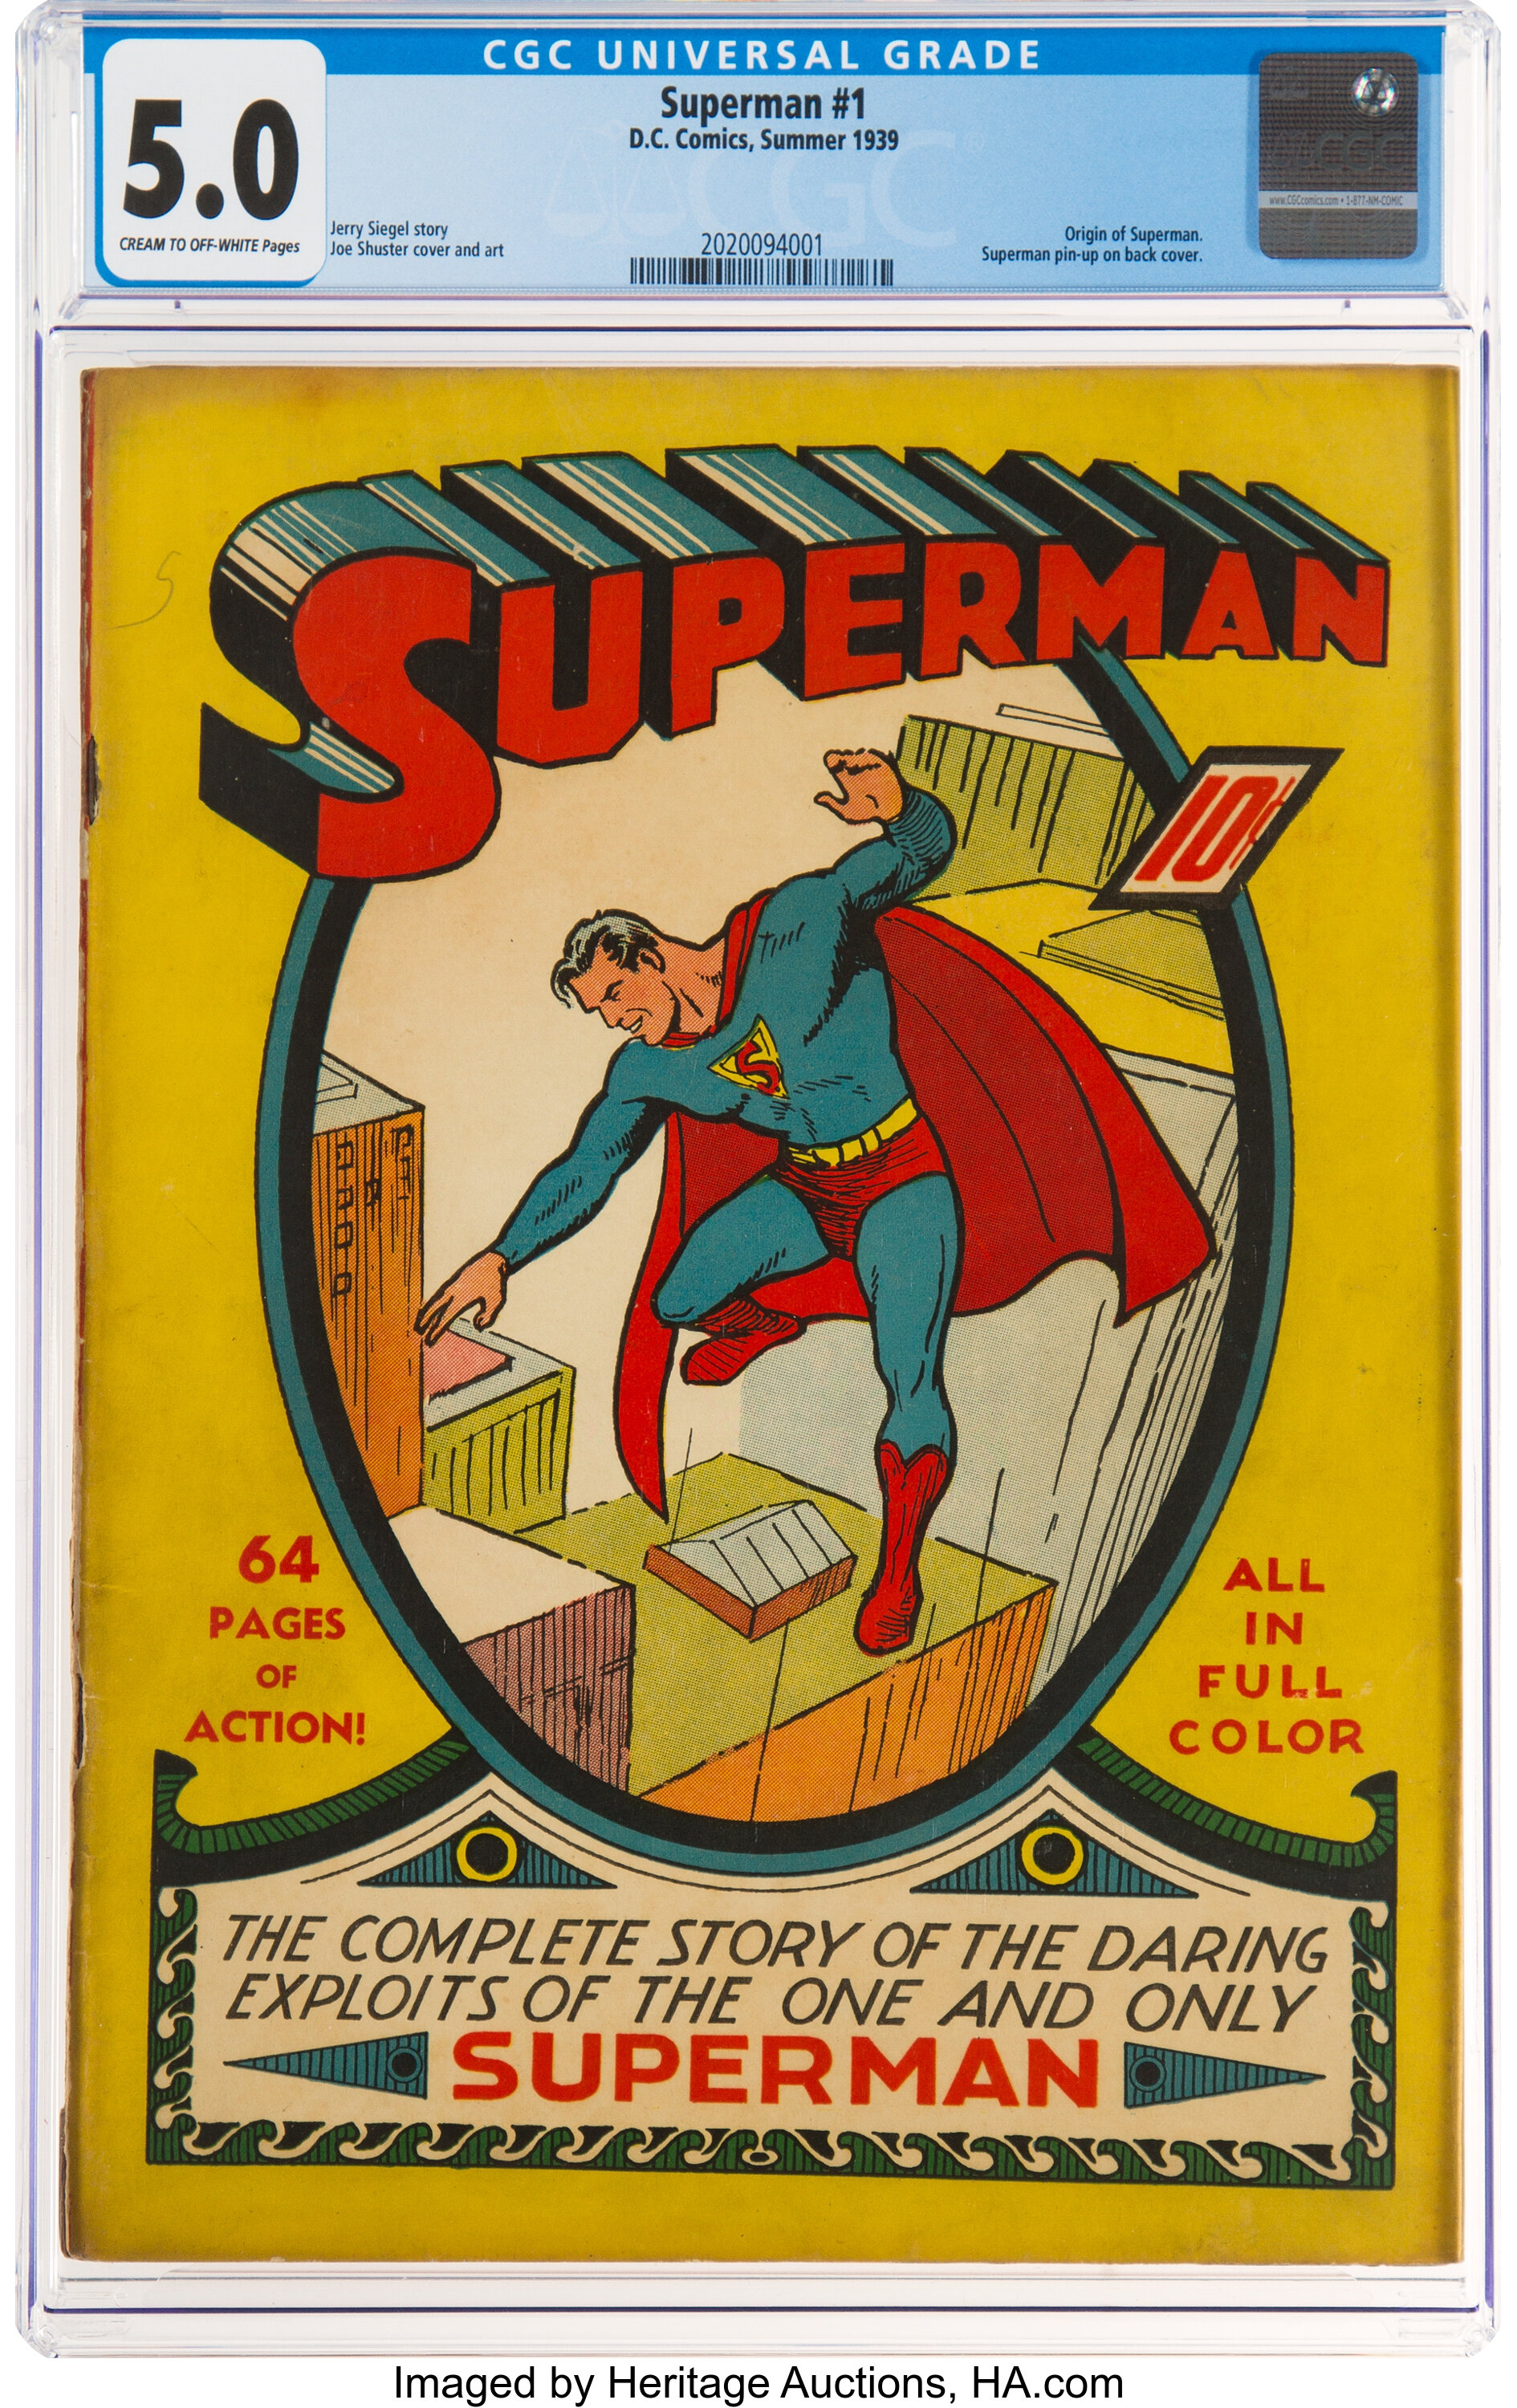 https://www.fortalezadelasoledad.com/imagenes/2022/04/28/heritage_auctions_superman_1_vintage_copy_2022_1.jpg